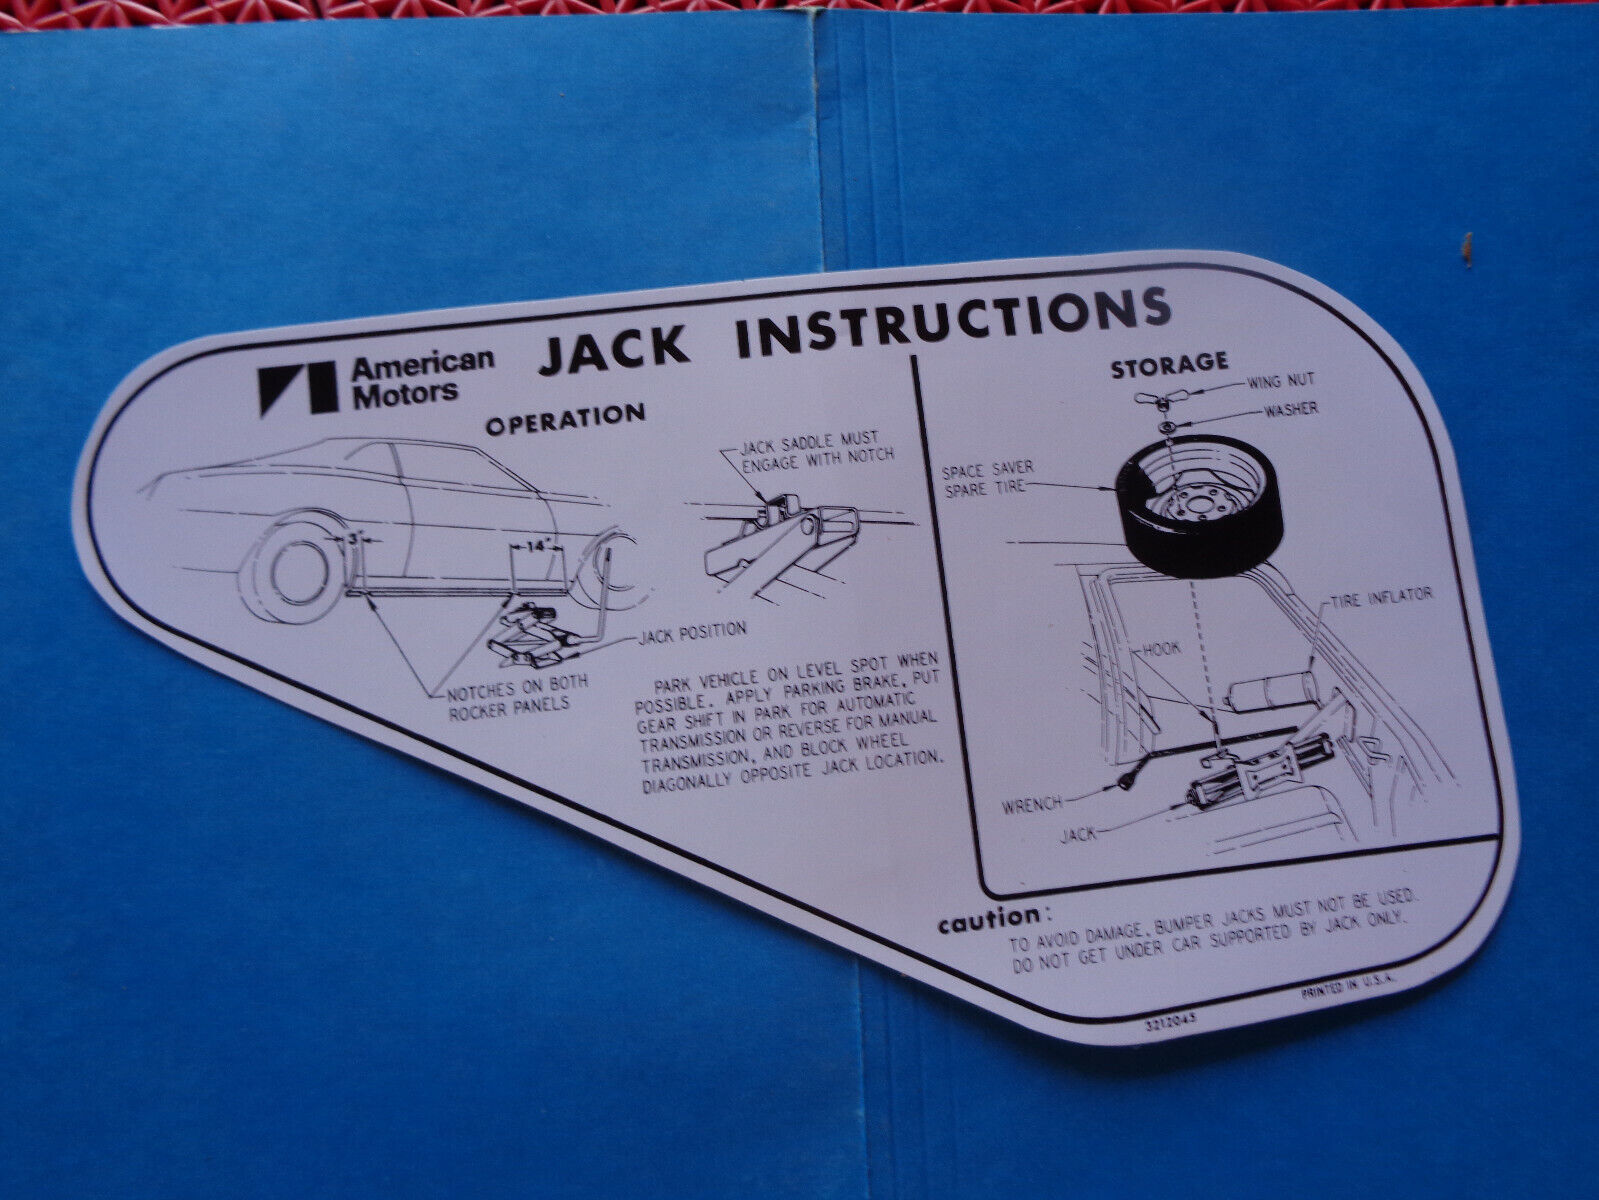 1971 - 1972 American Motors Javelin AMX jacking instructions (space saver tire)